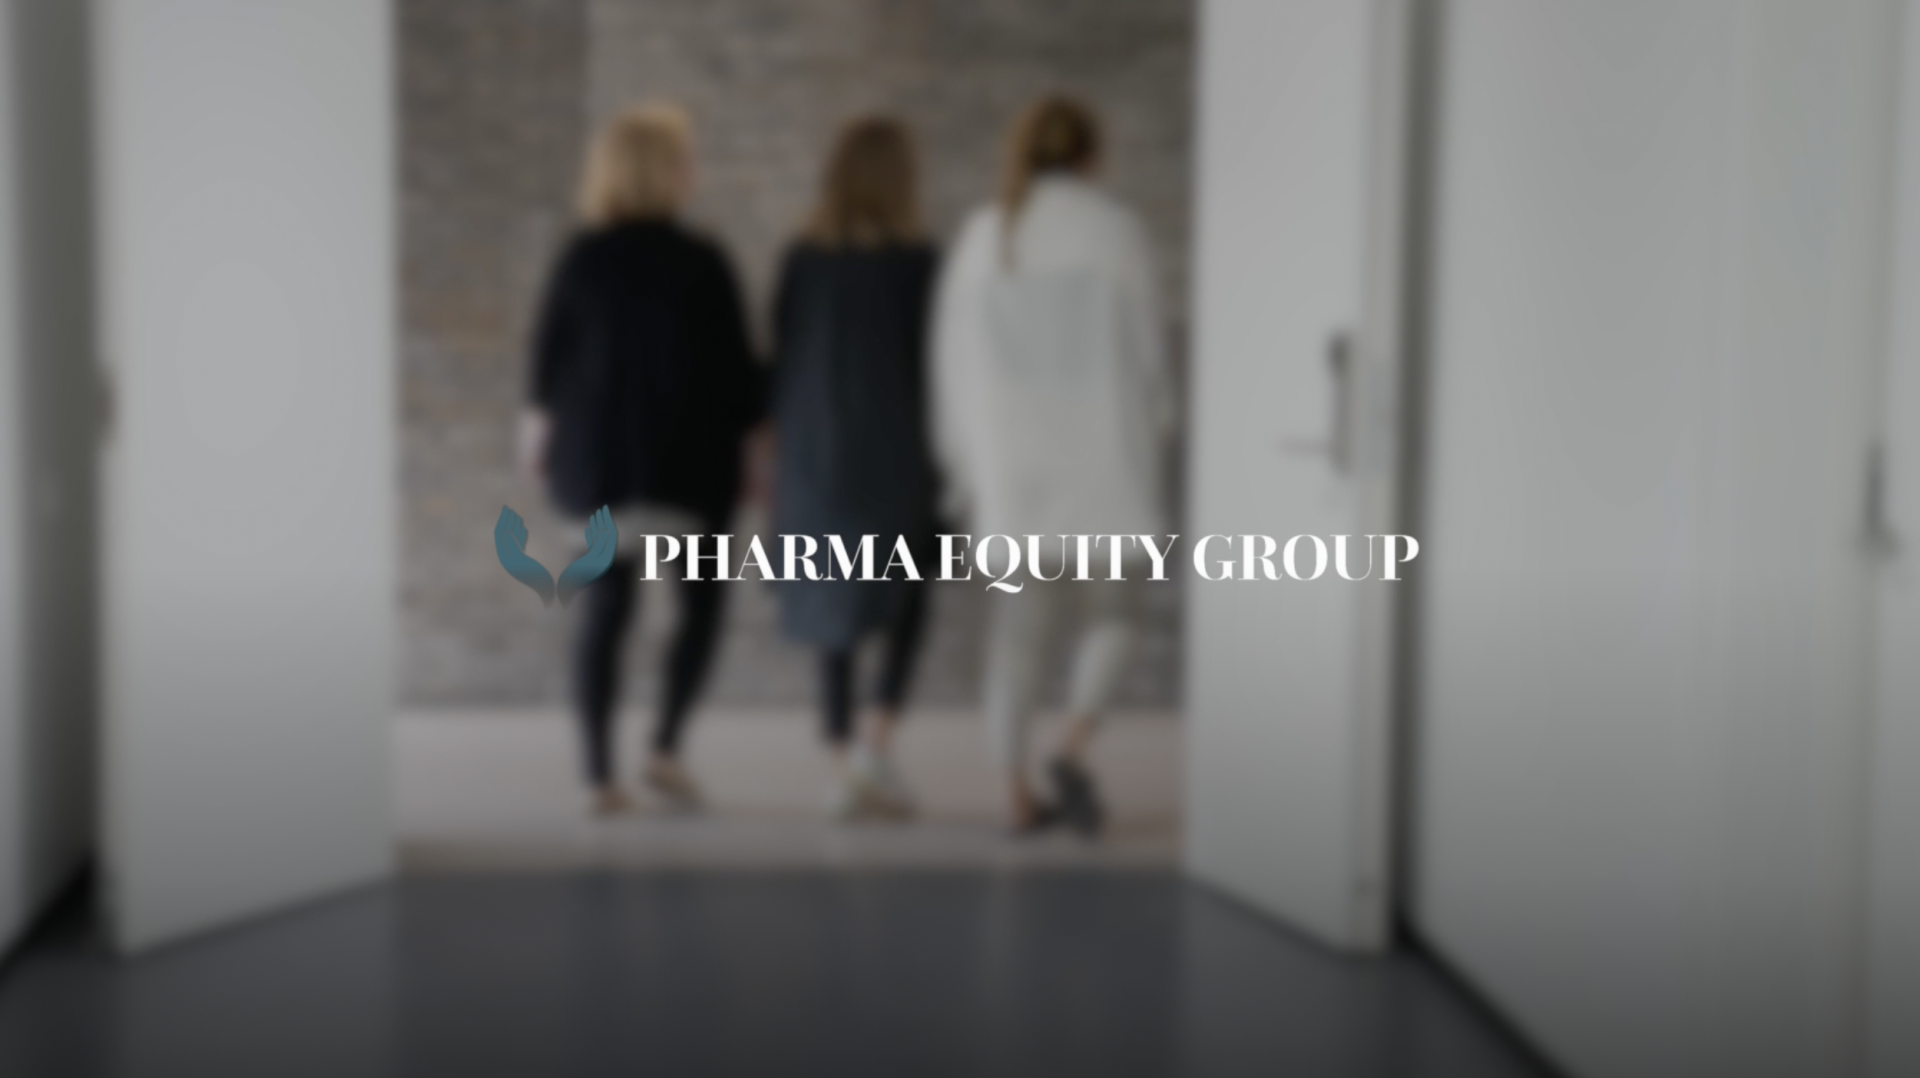 Pharma Equity Group retter fokus mod skjult sygdom